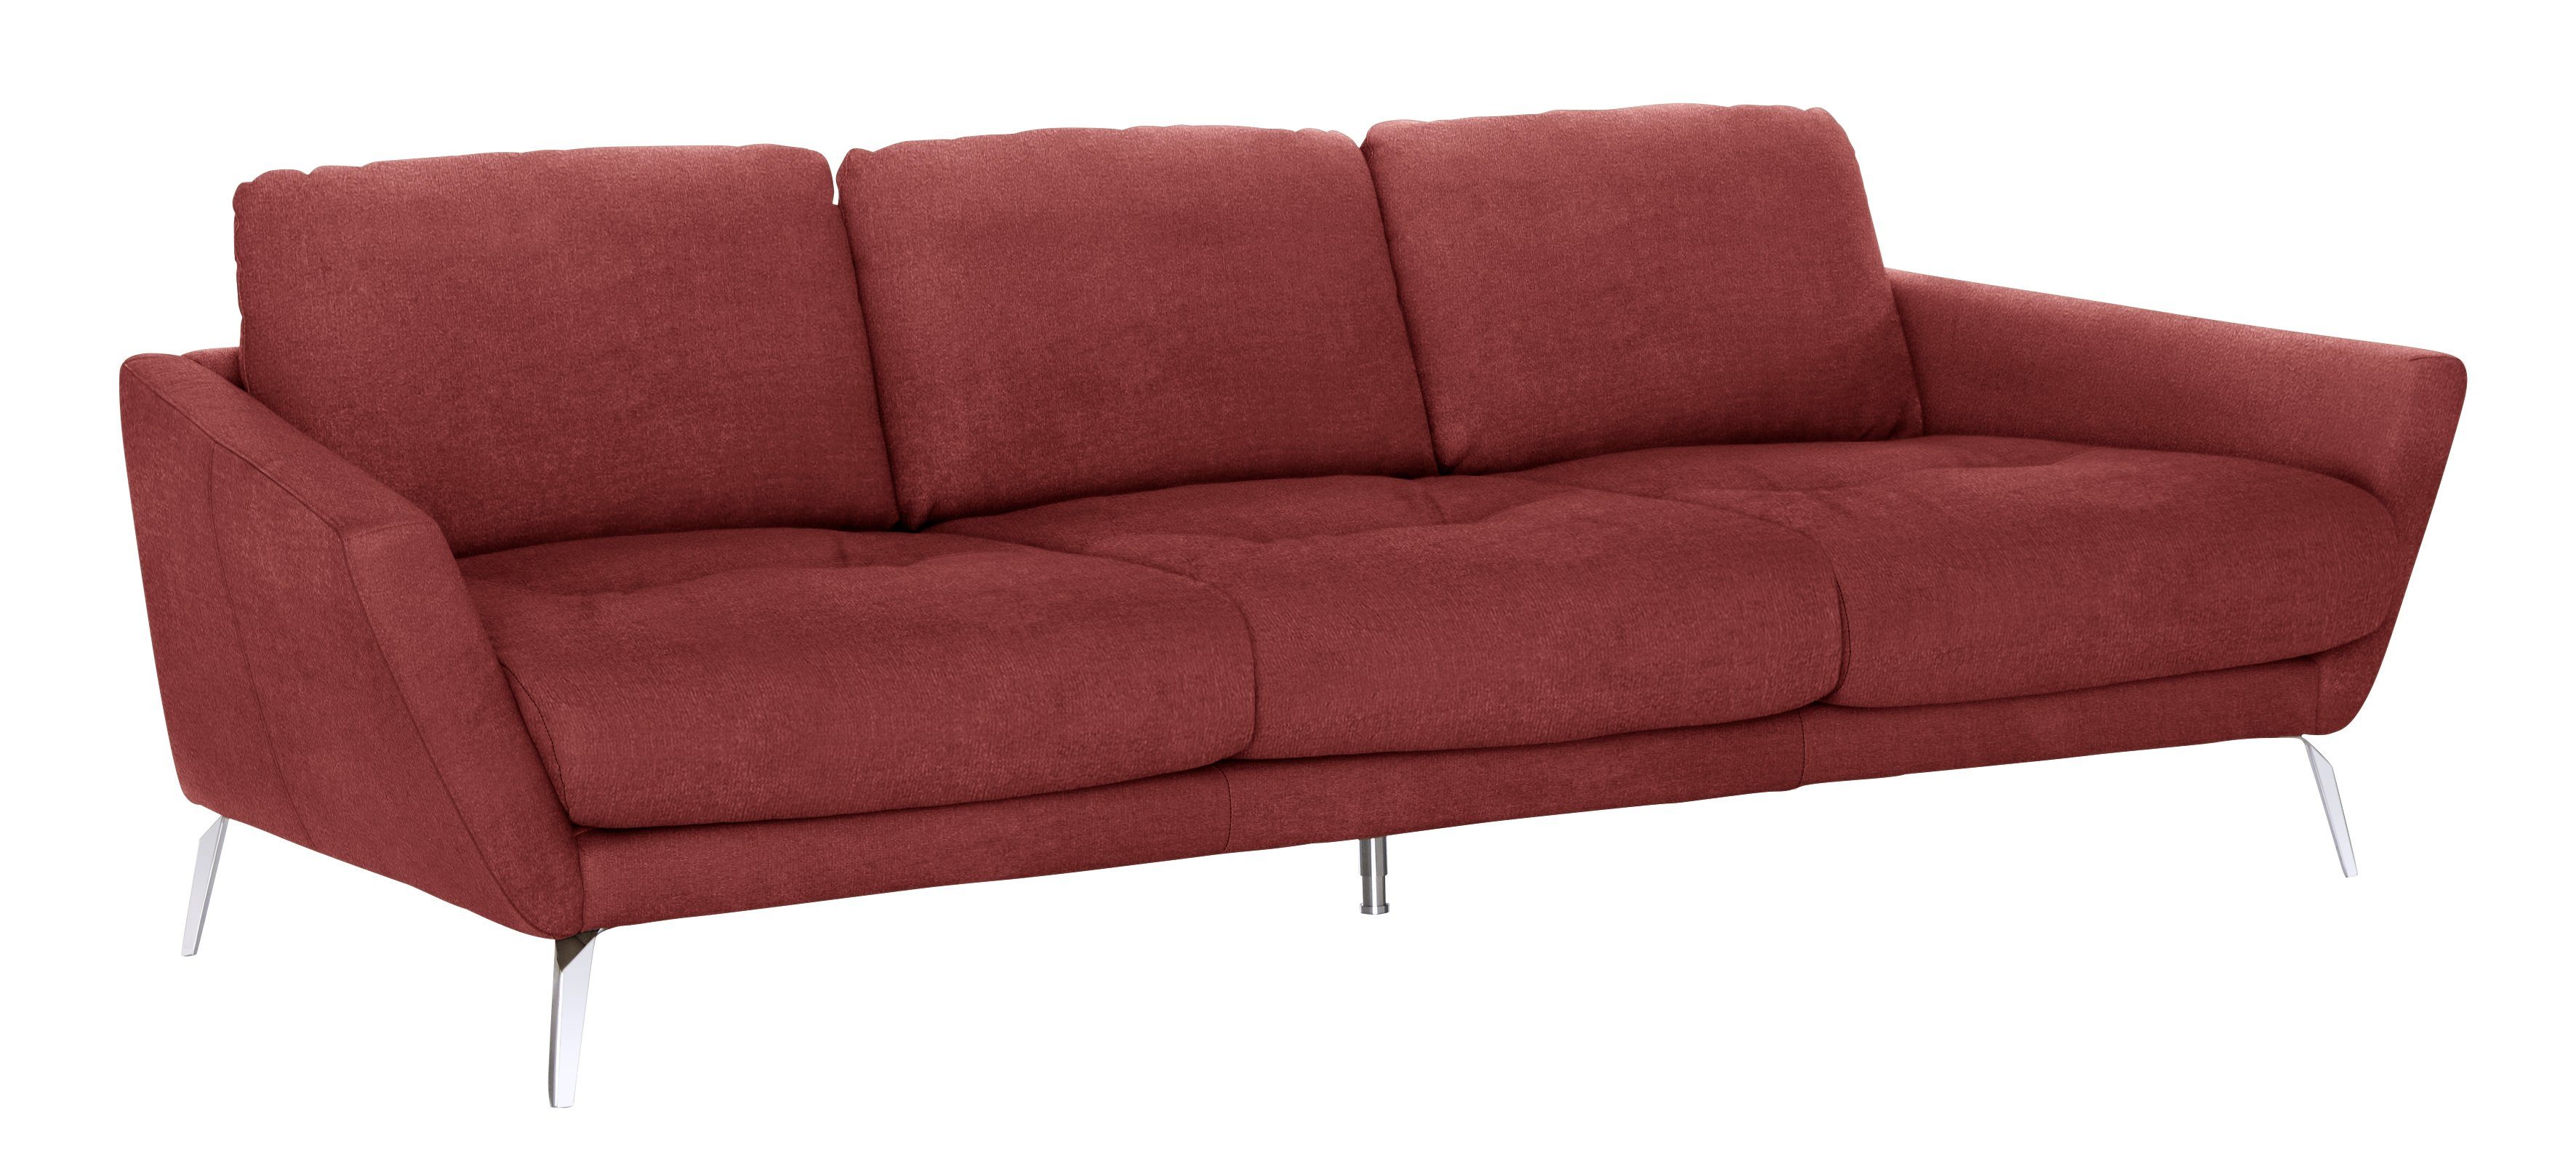 W.SCHILLIG Big-Sofa softy, mit Chrom Sitz, im Heftung dekorativer Füße glänzend